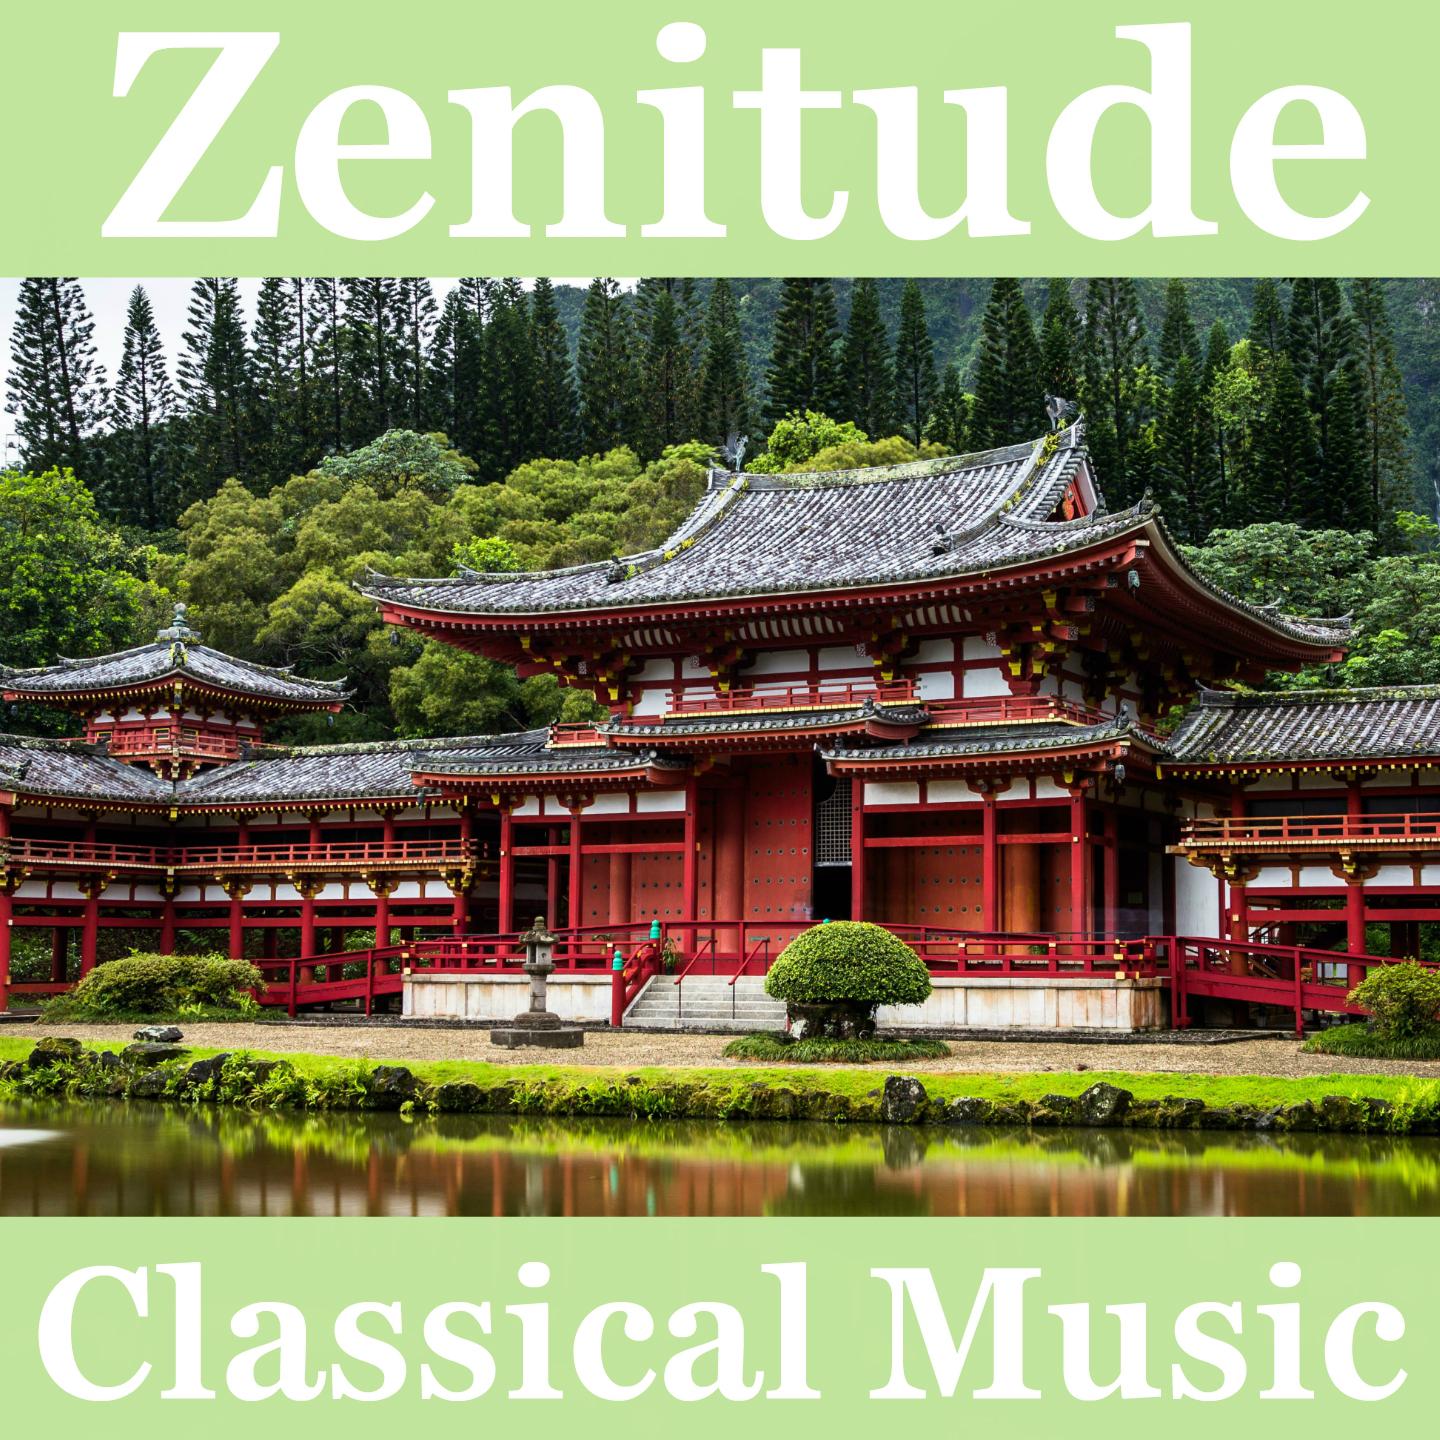 Zenitude Classical Music